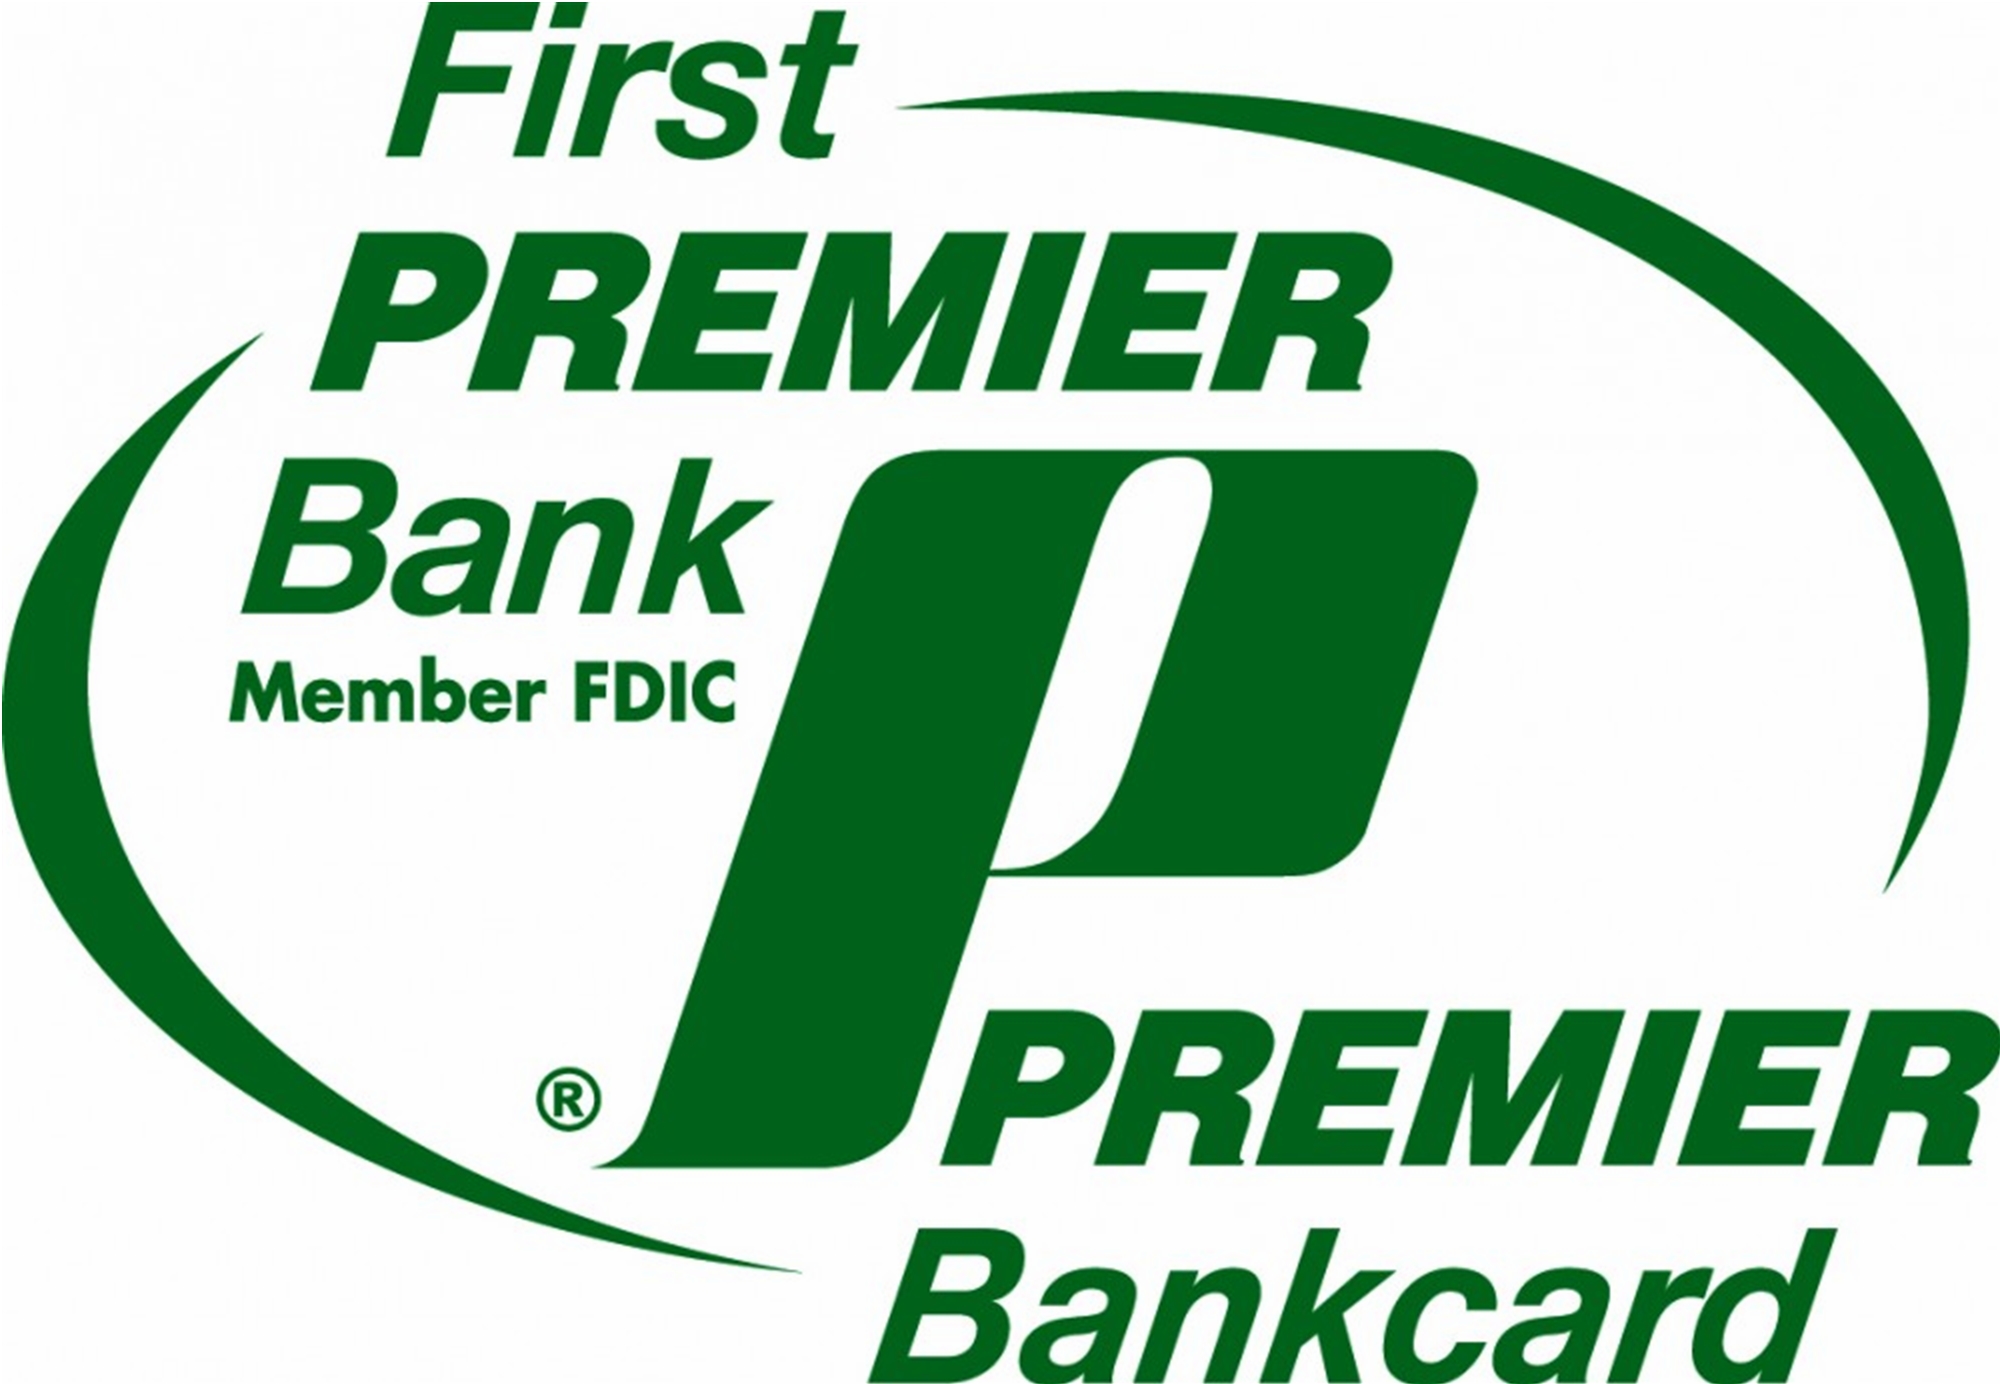 First PREMIER Bank/PREMIER Bankcard